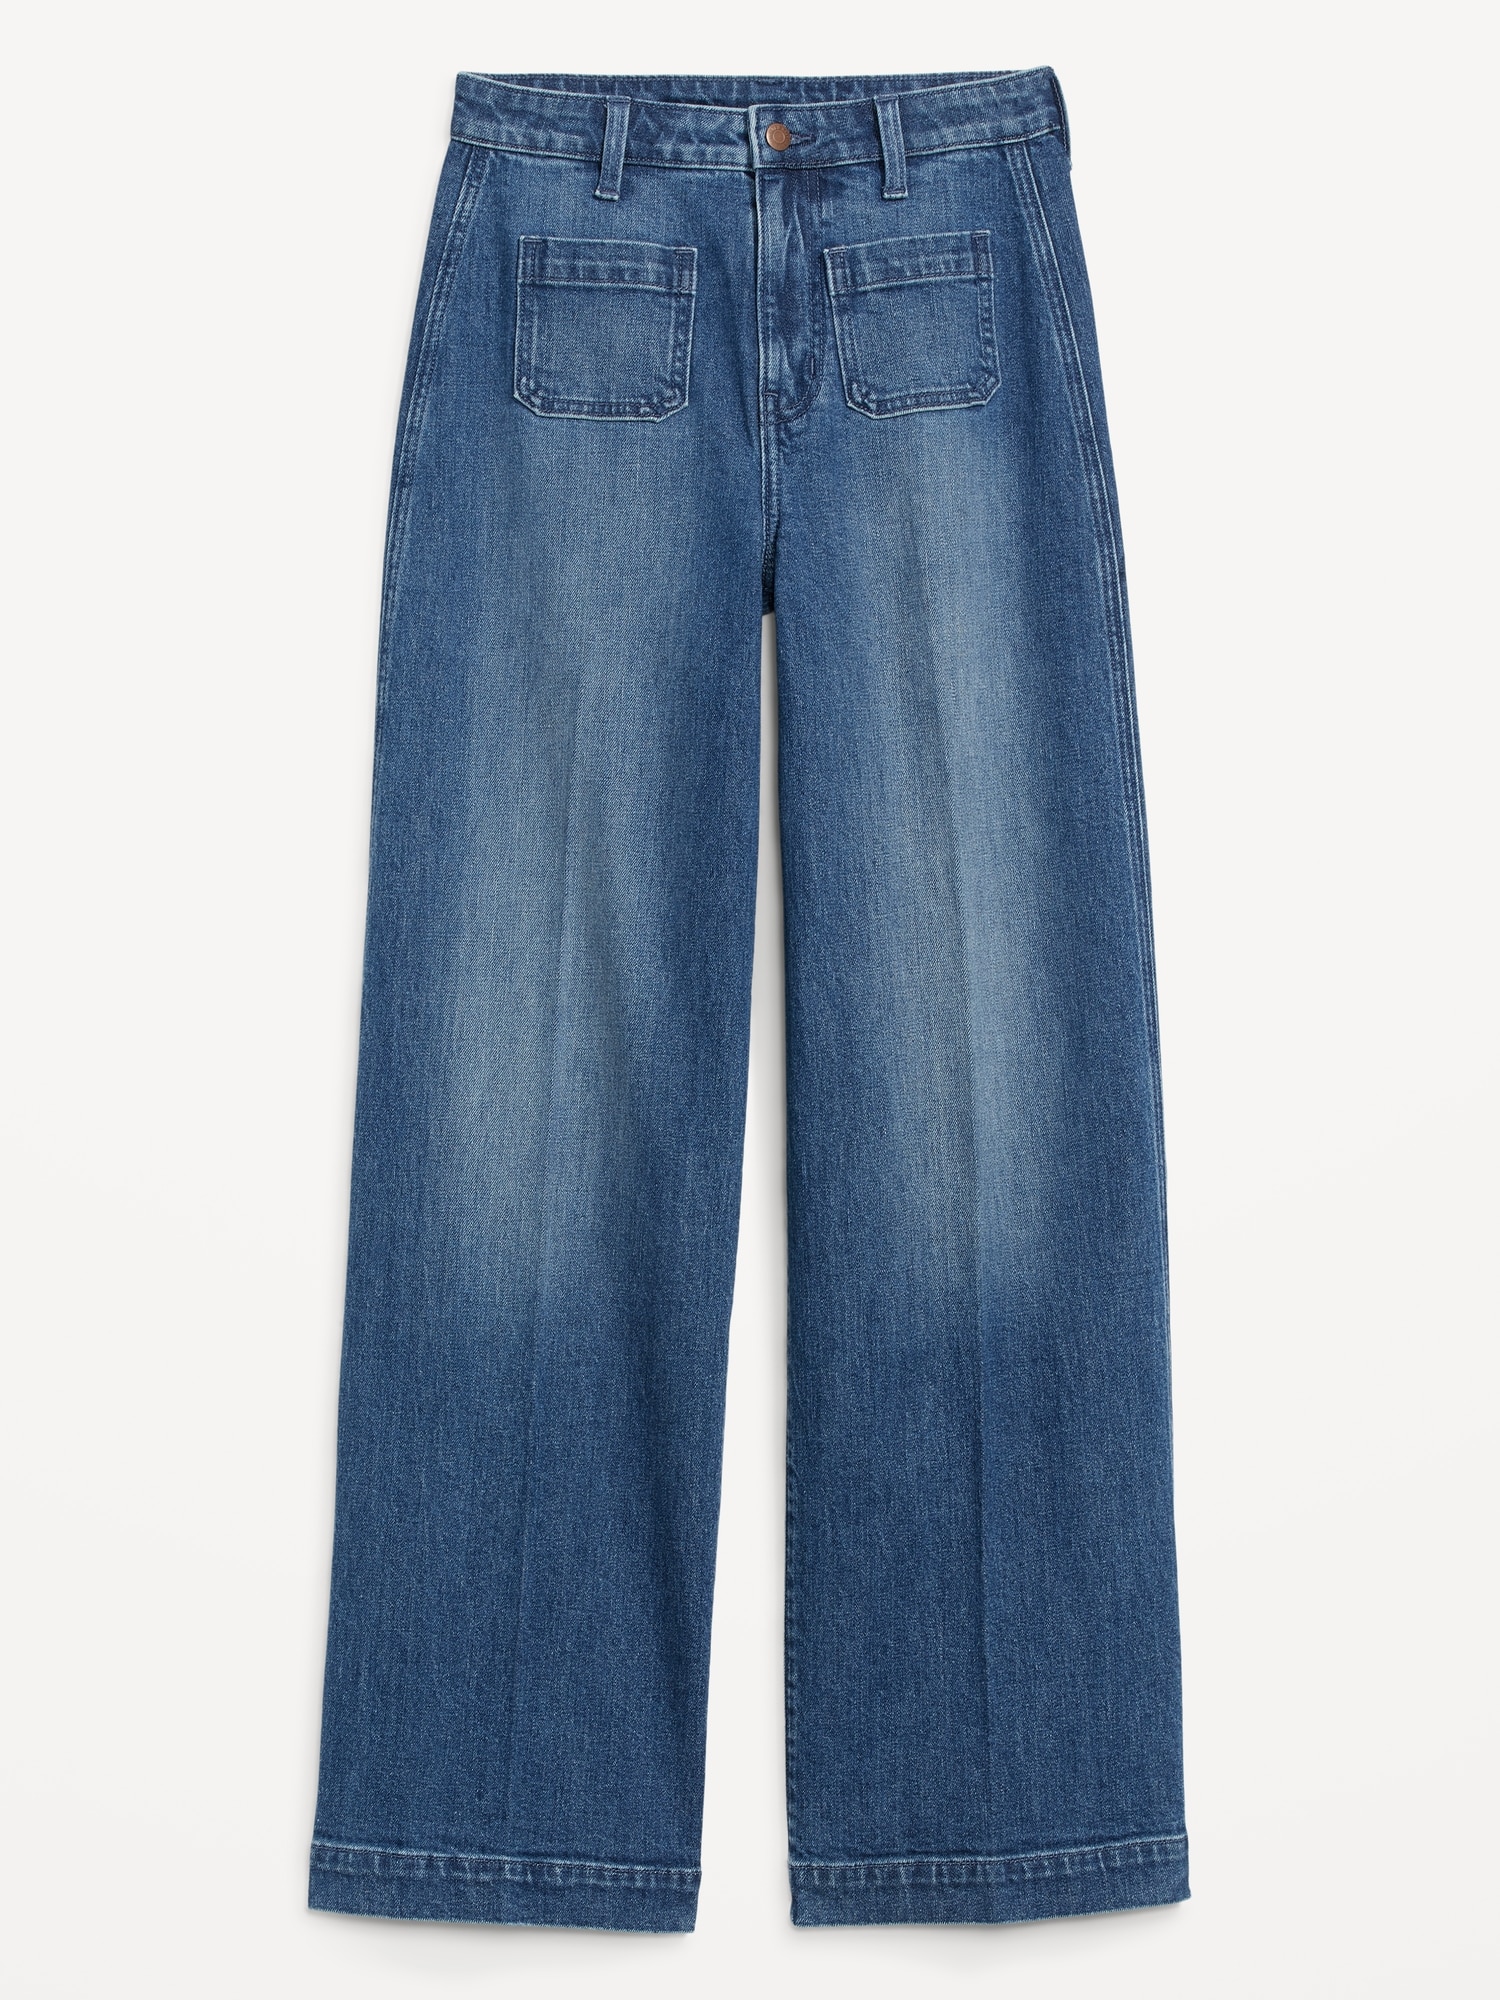 Get Pleat Detail Wide Leg Denim Jeans at ₹ 2850 | LBB Shop-sgquangbinhtourist.com.vn